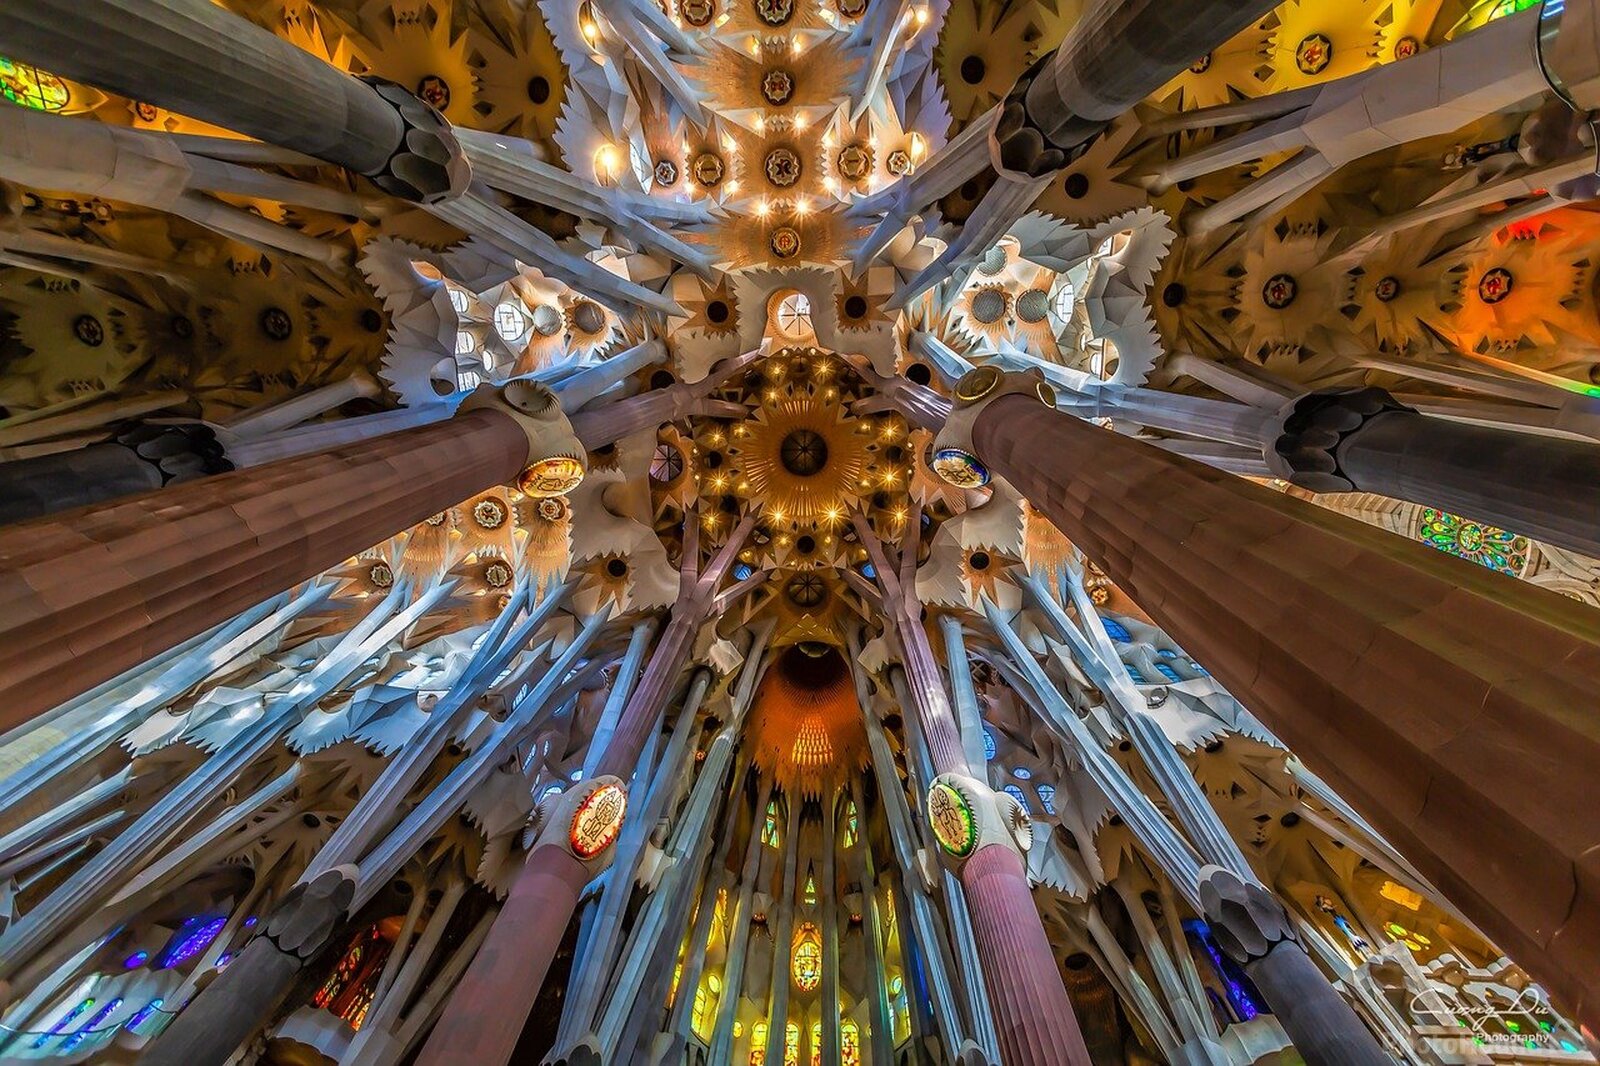 Image of Sagrada Familia by Team PhotoHound